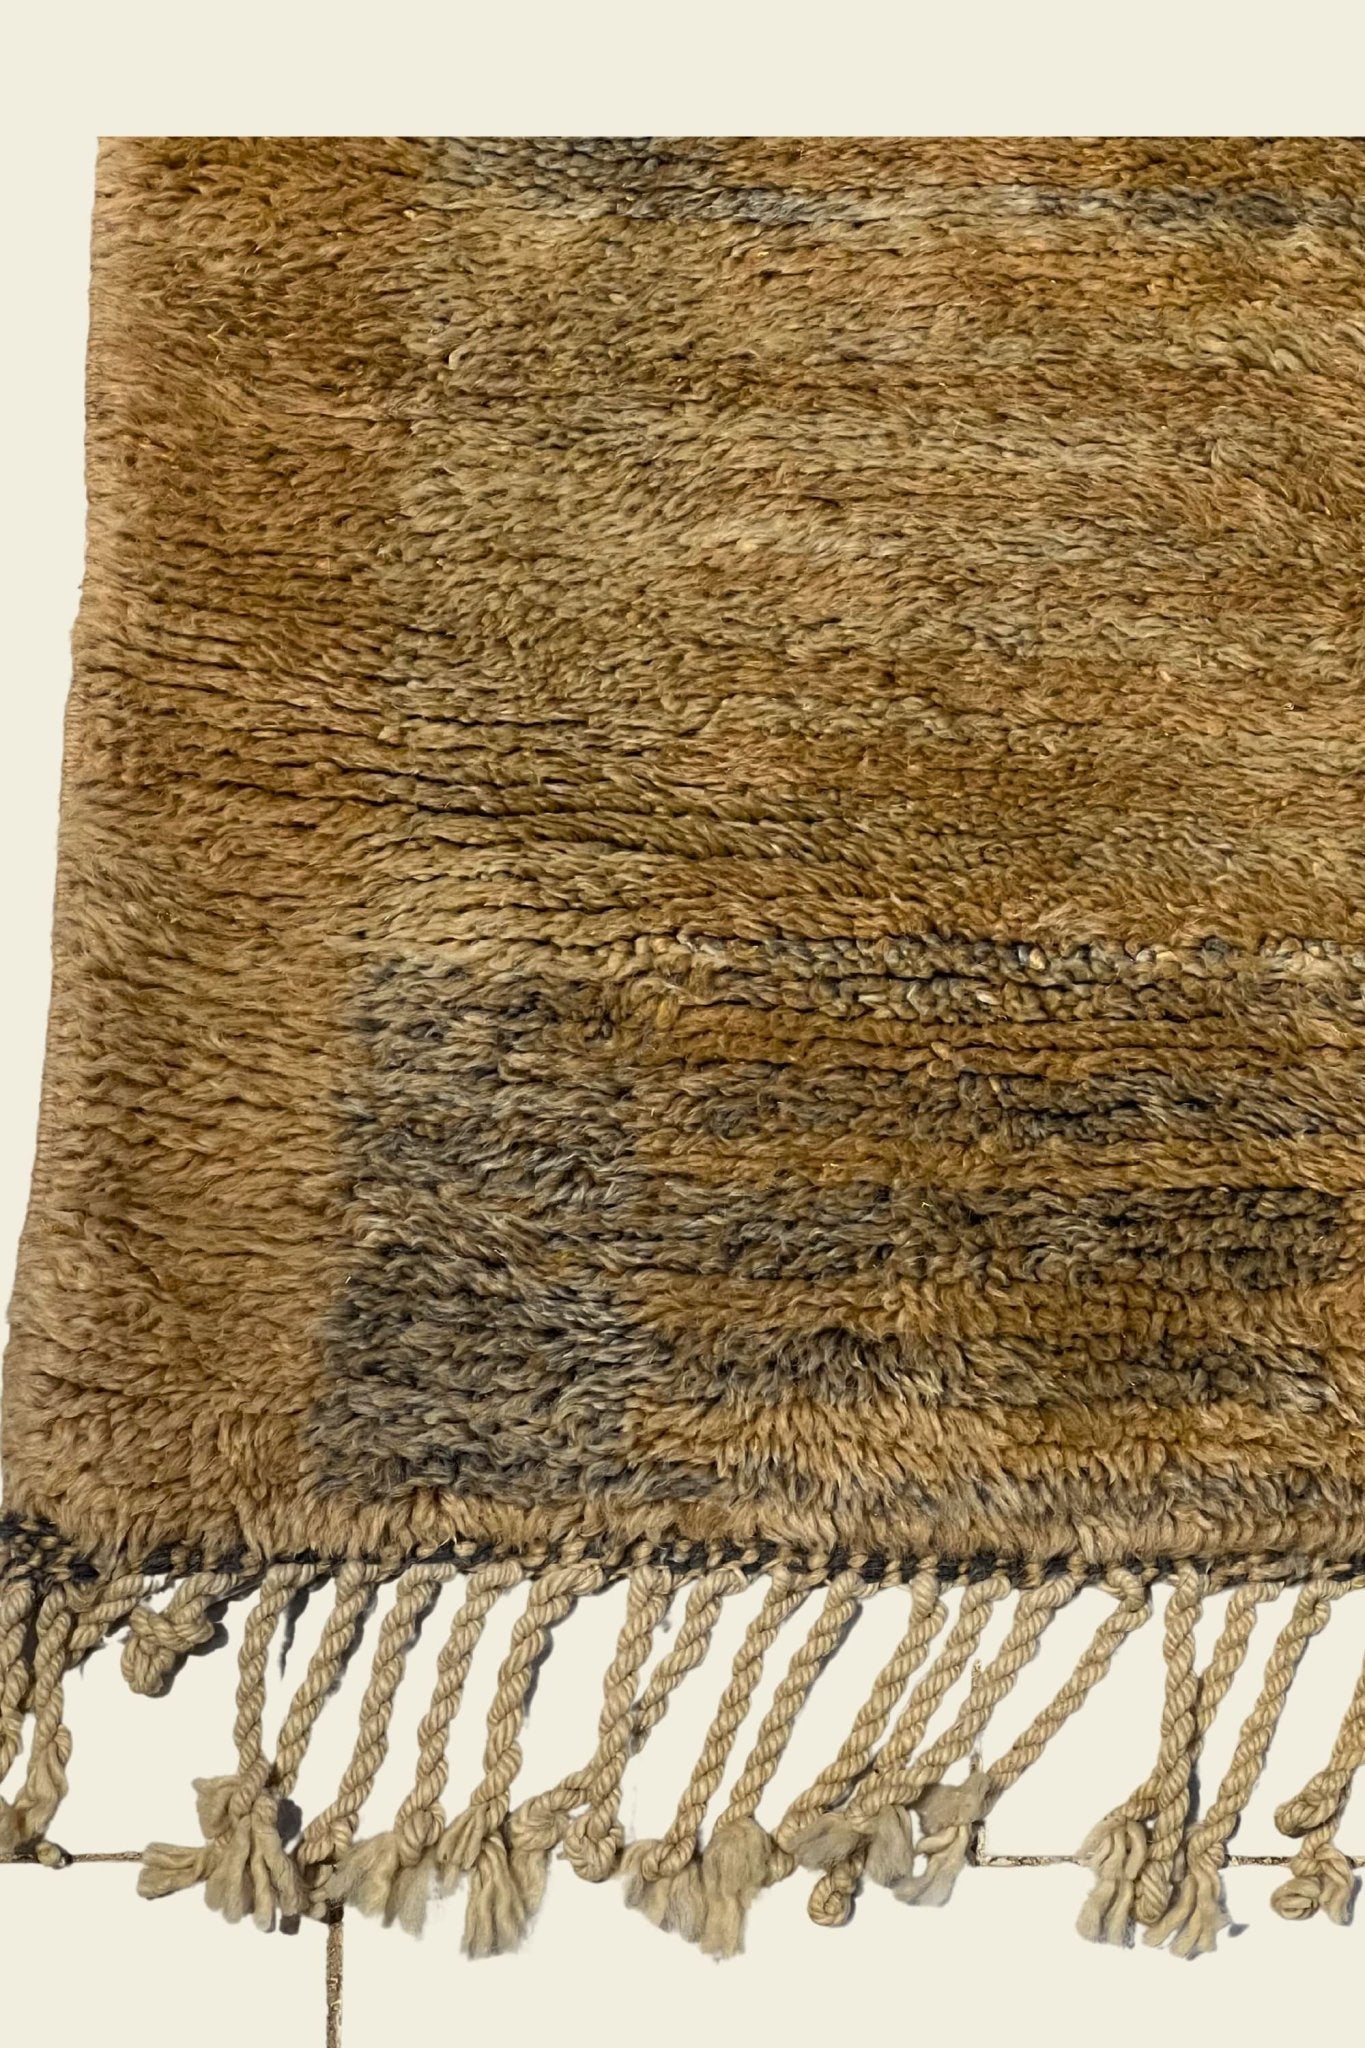 Contemporary Beni Mrirt Berber Rug 5'67" x 7'67" - 173 cm x 234 cm (Wool) - Dar Bouchaib Marrakech